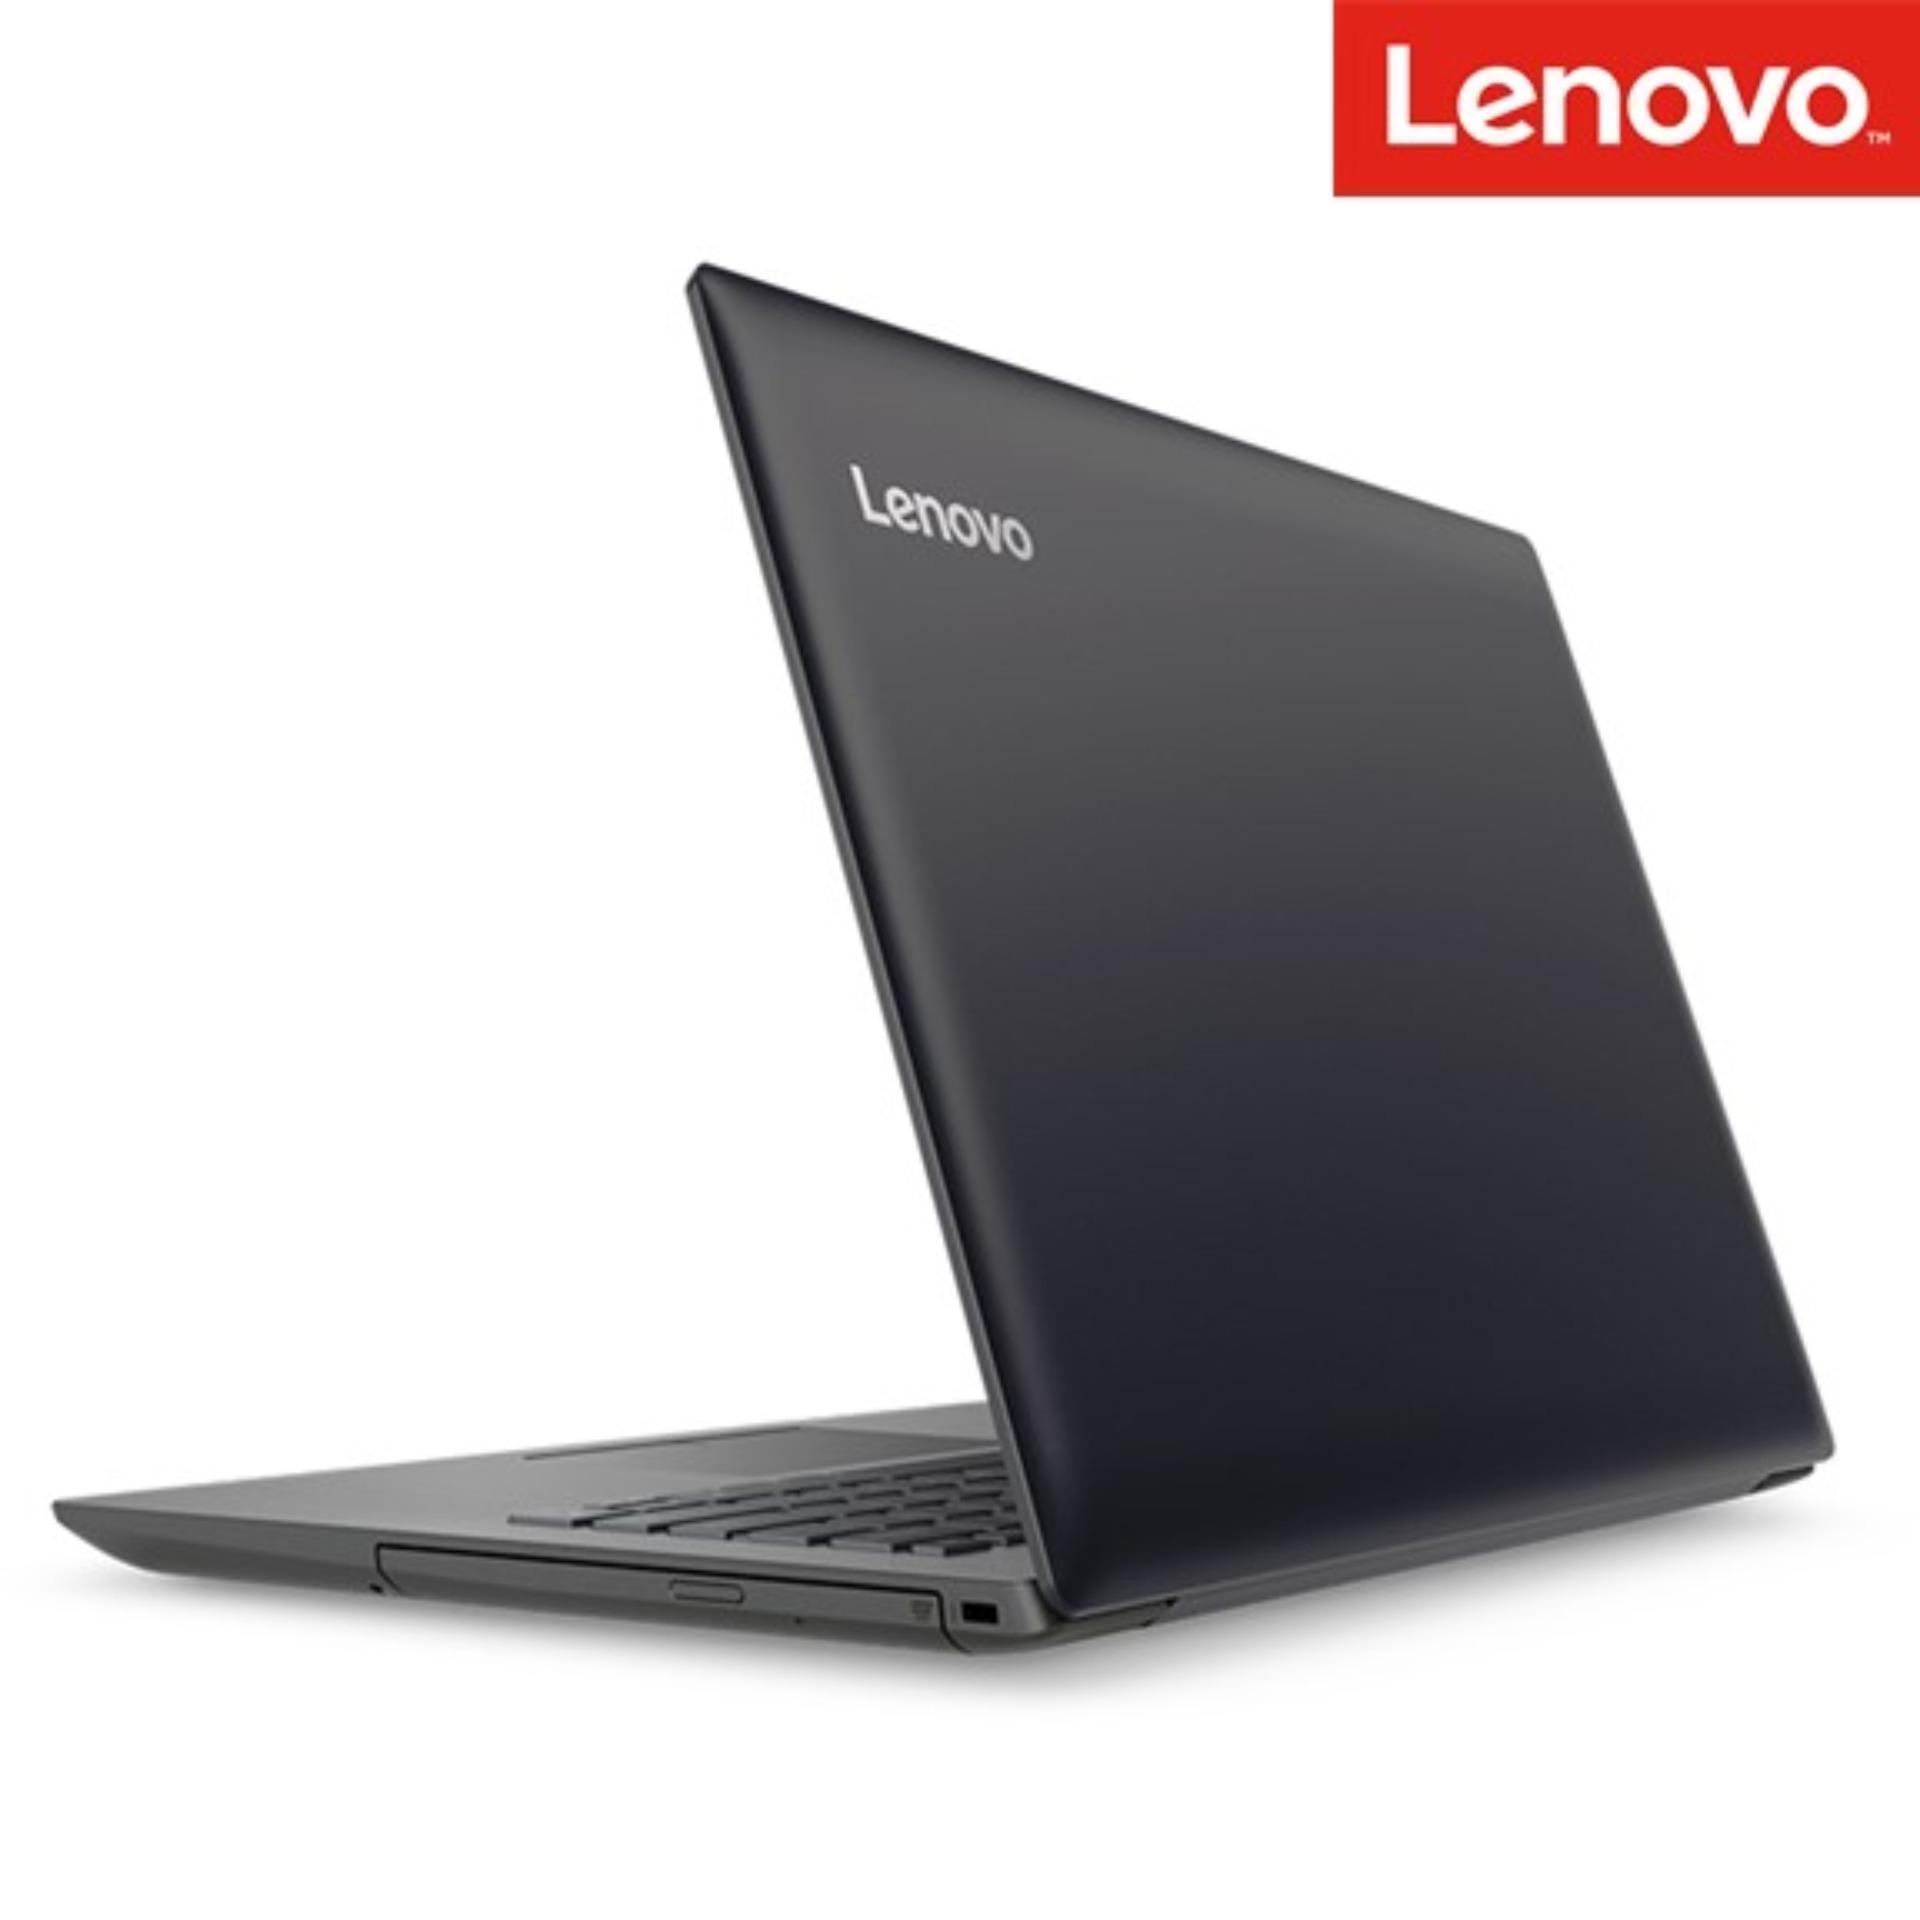 Spesifikasi Lenovo Ideapad 330 14ikbr 8lid dan Harga Terbaru